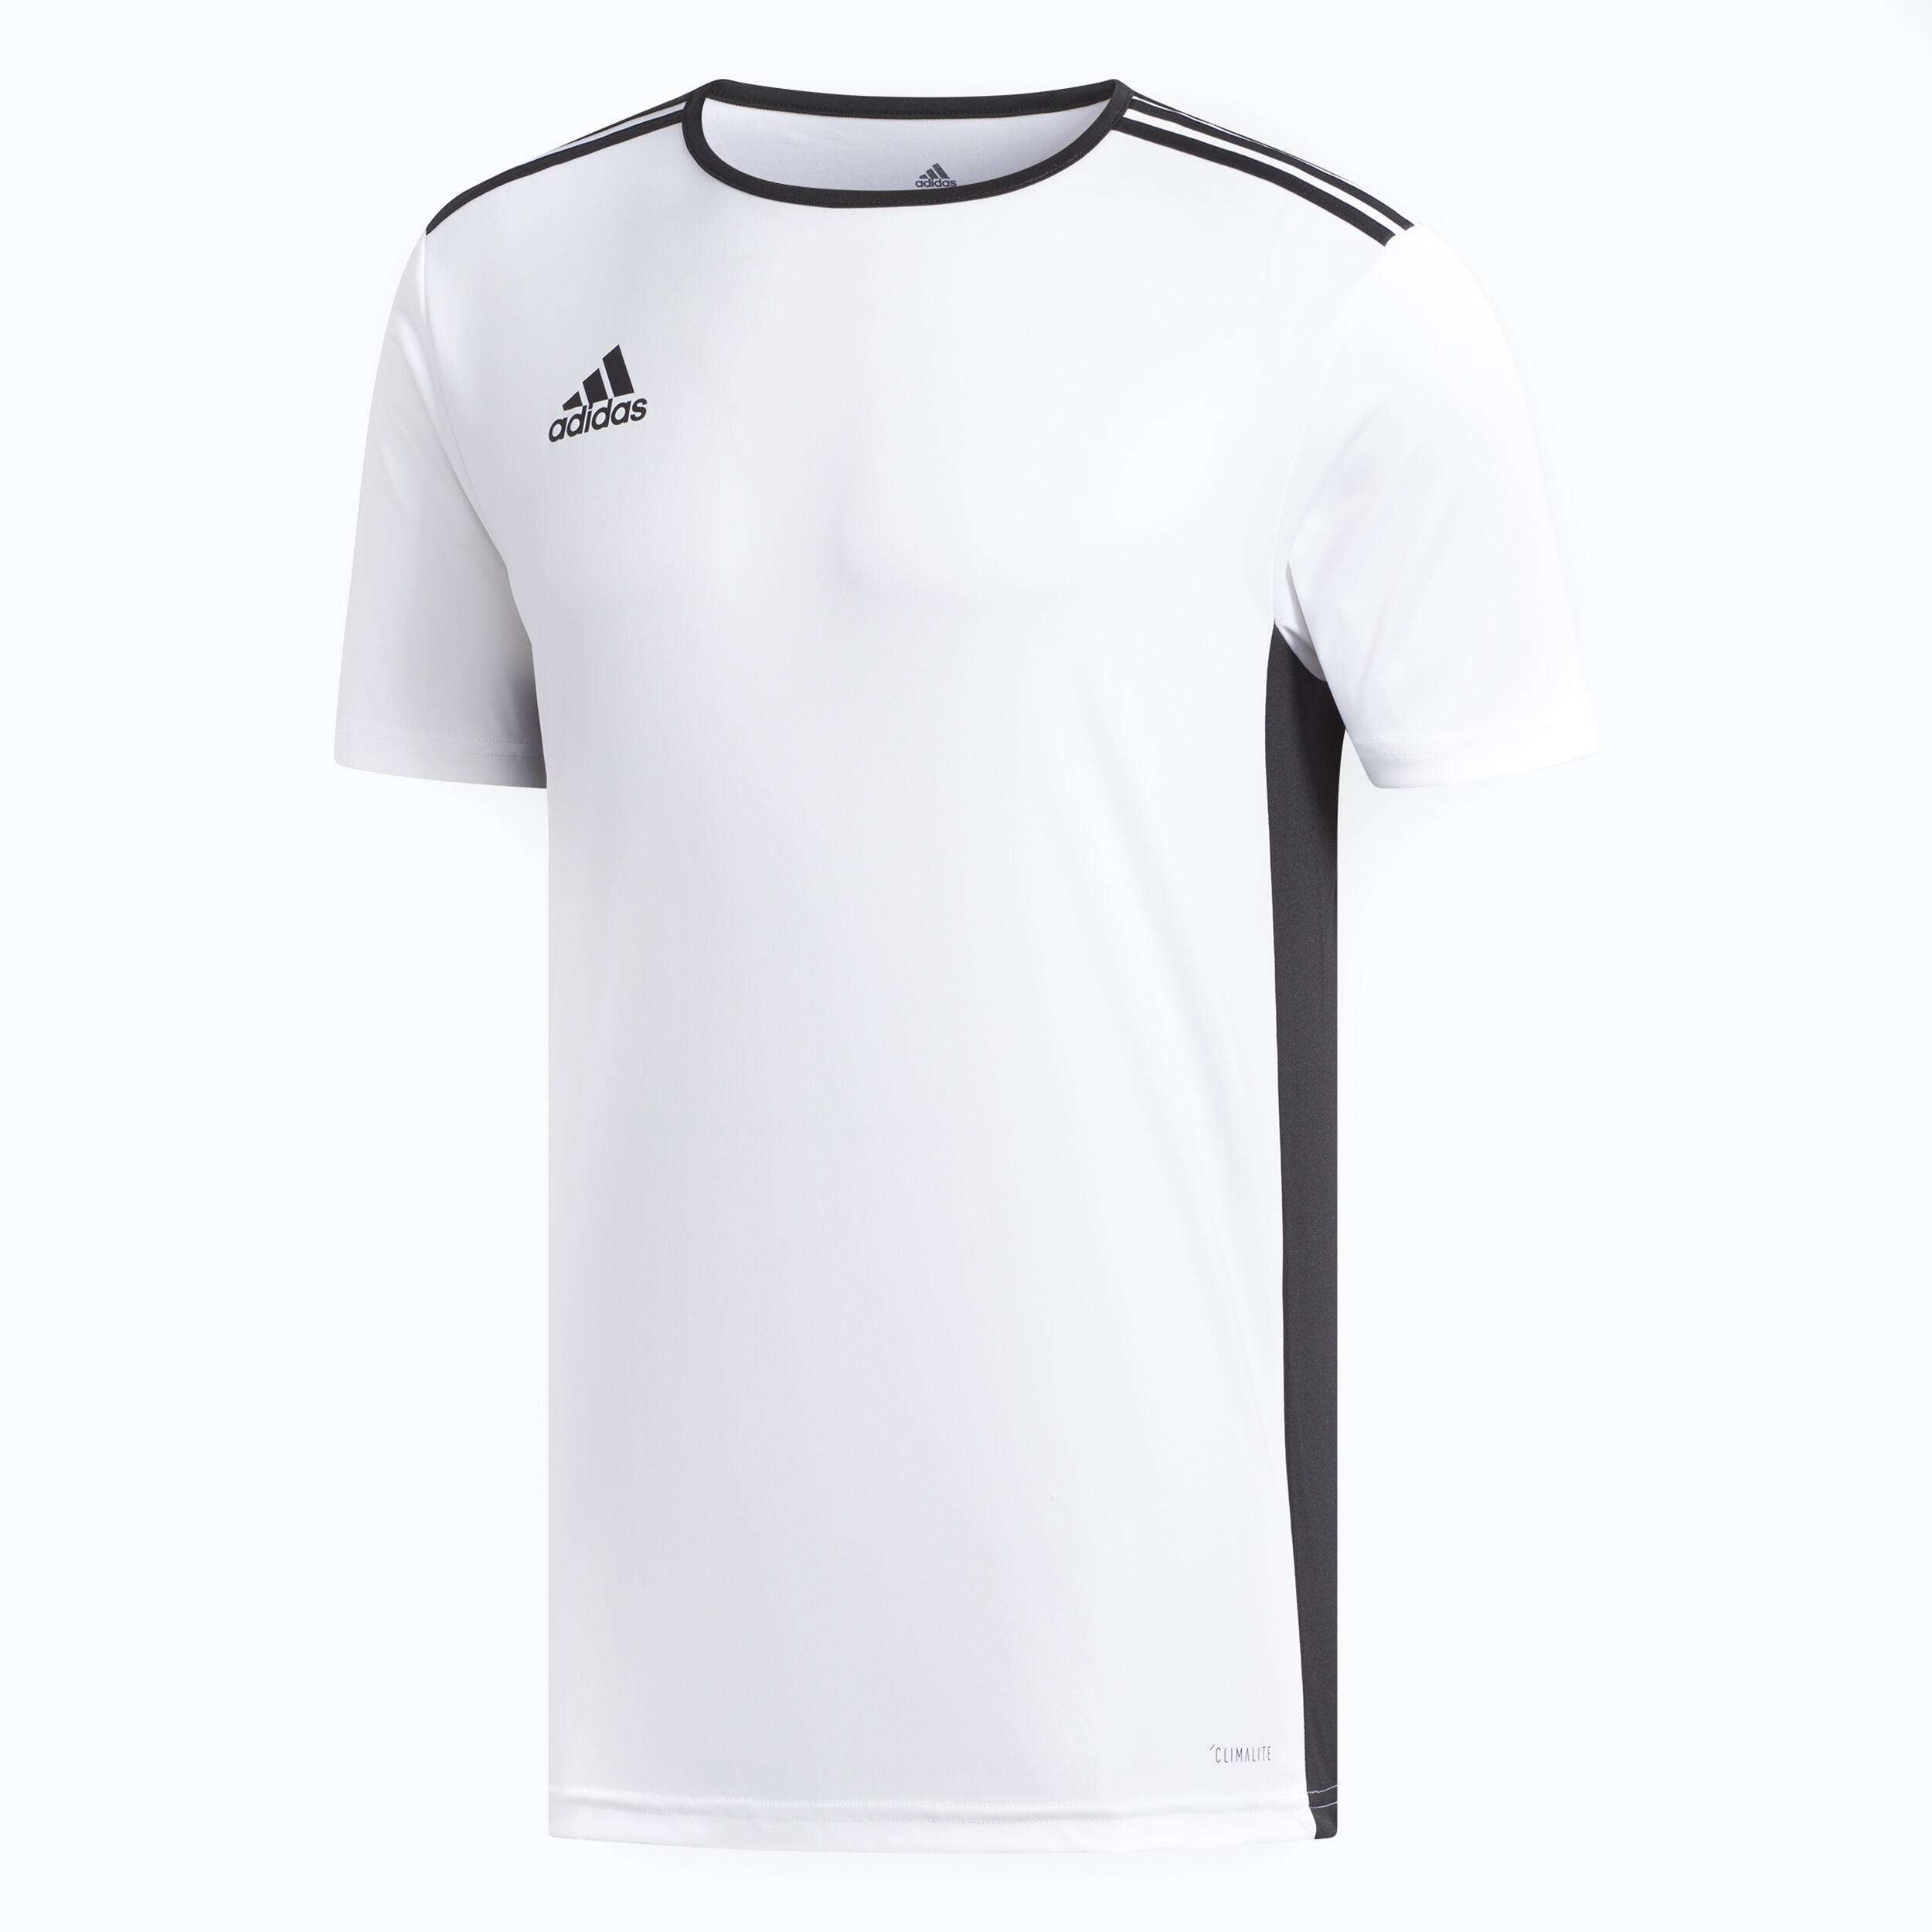 Catalogo Camisetas Adidas Futbol Top Sellers, SAVE - icarus.photos